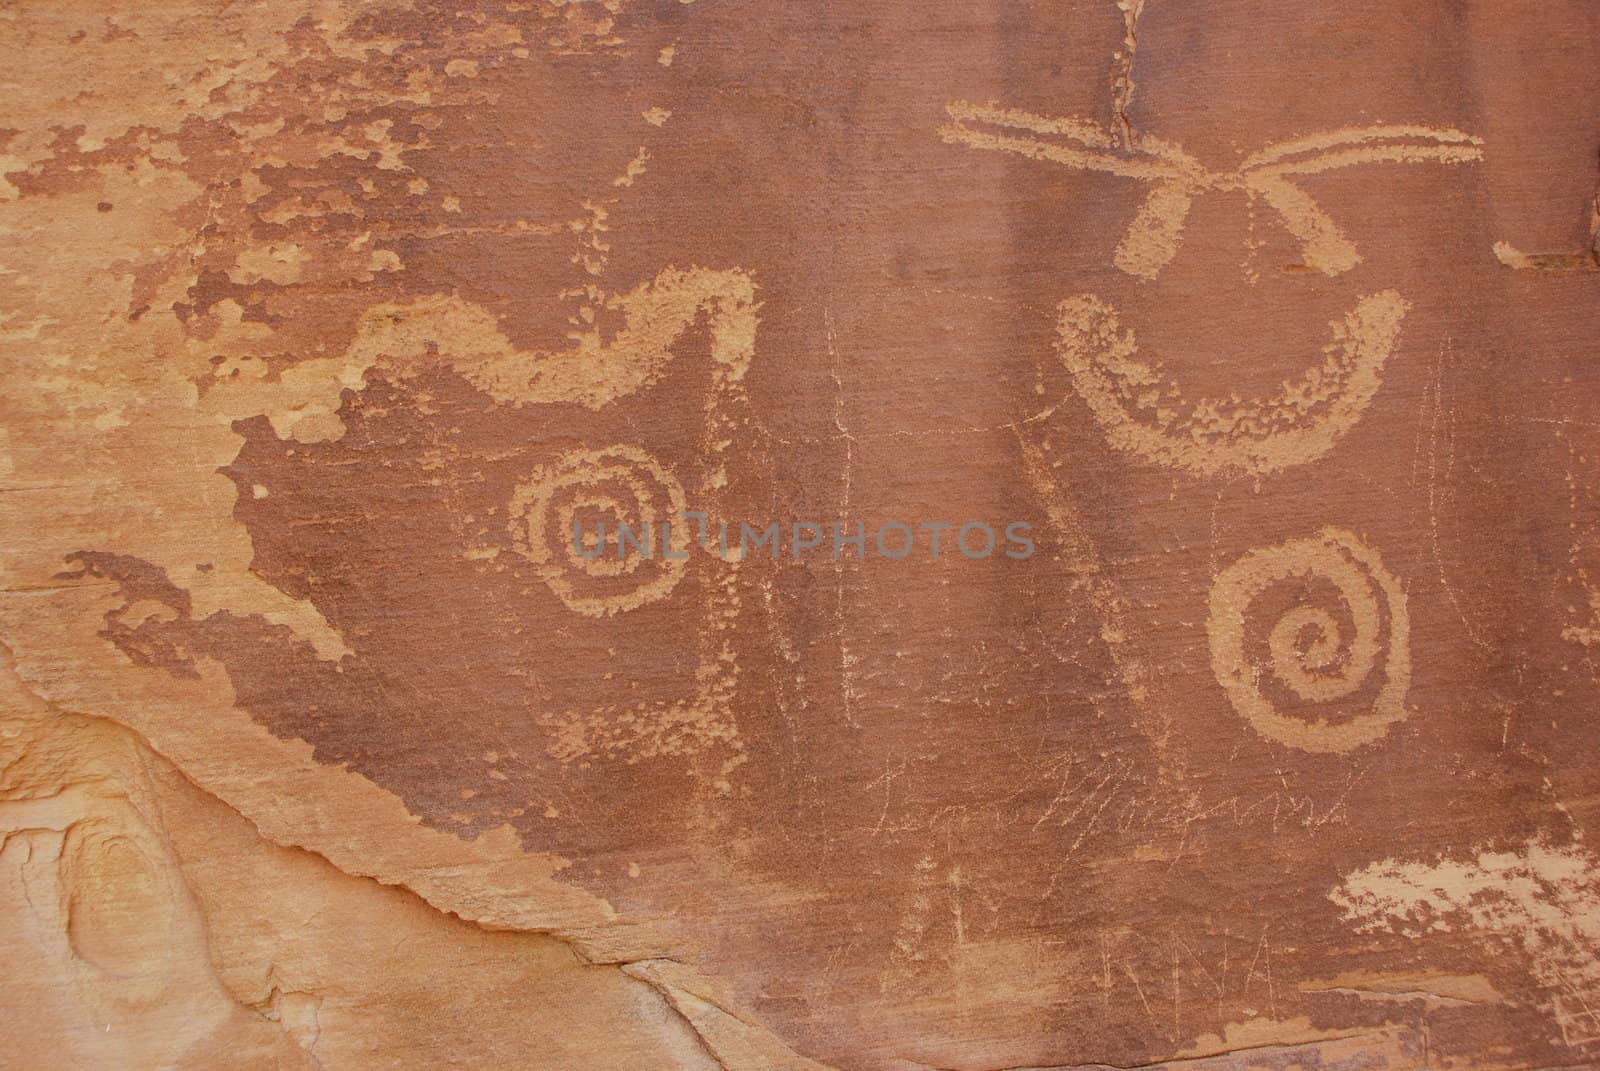 Petroglyphs B by photocdn39